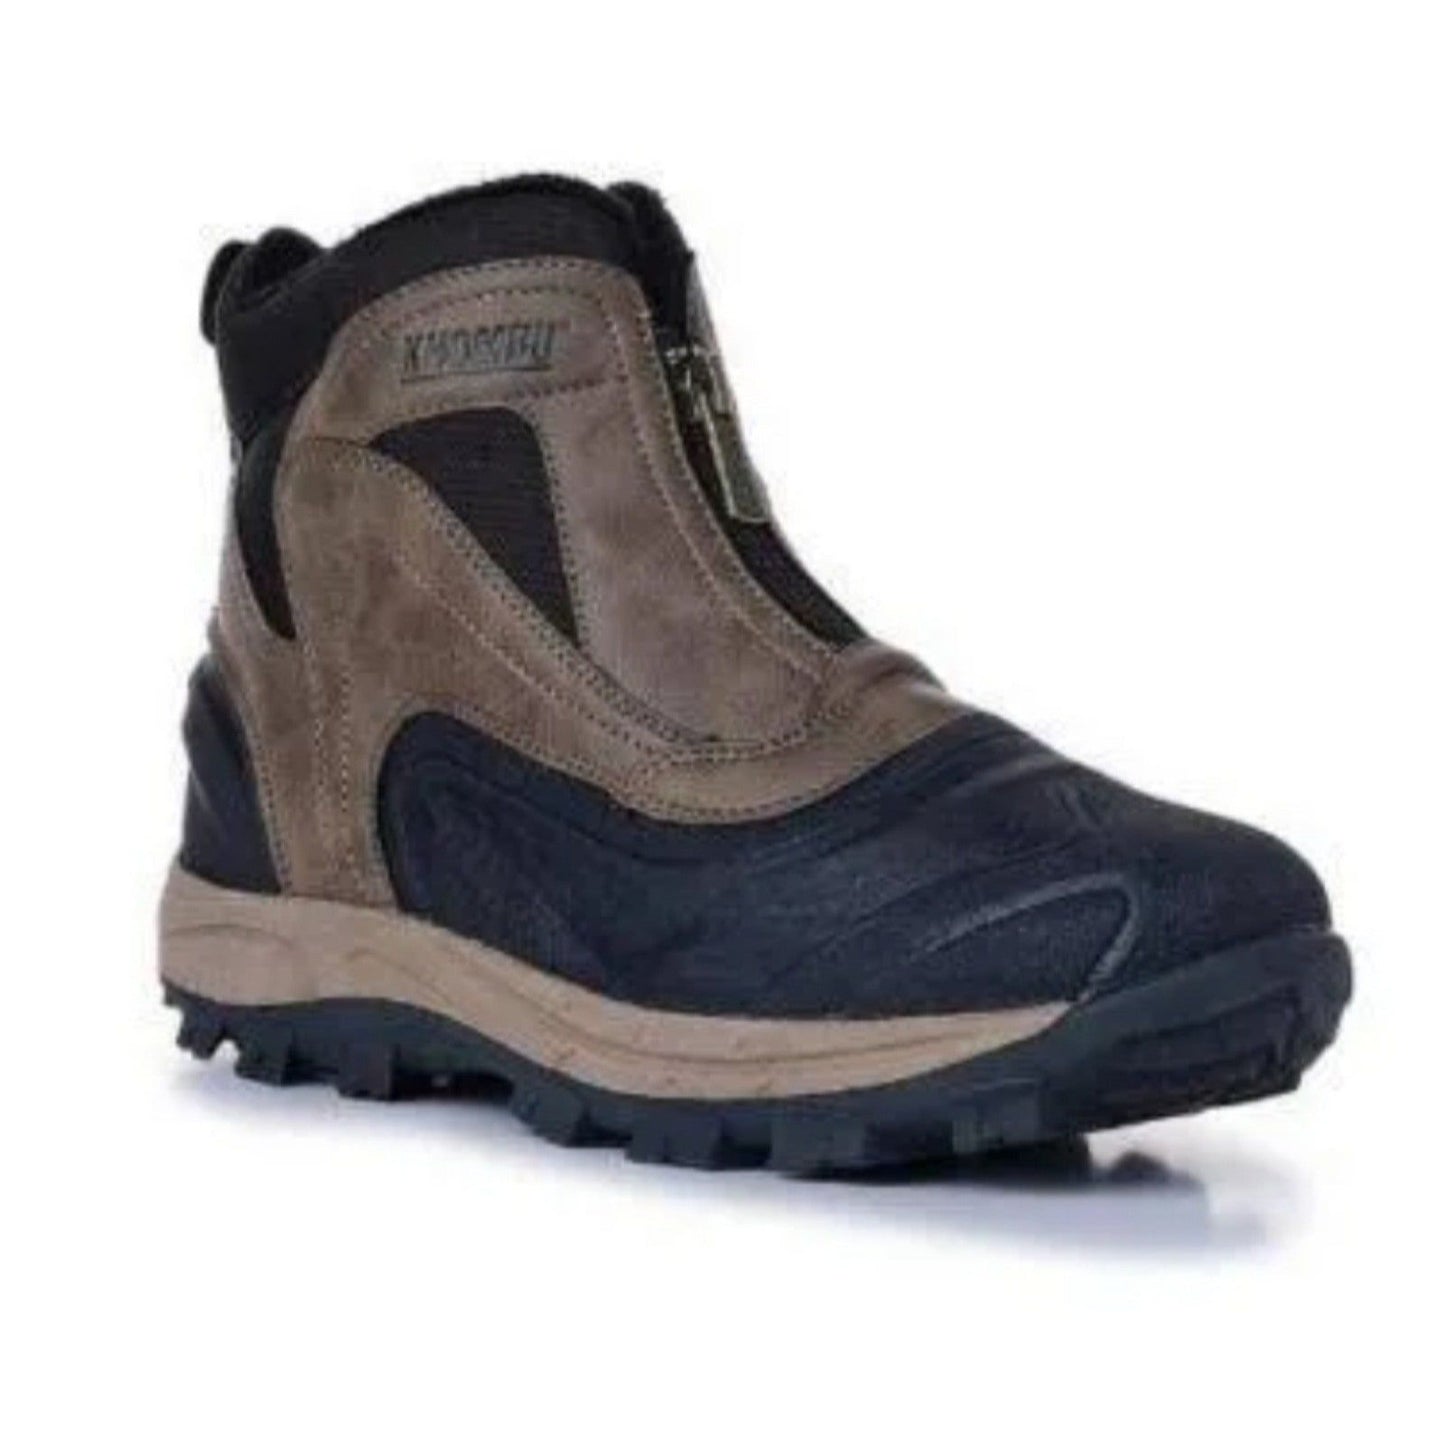 KHOMBU Boots Men's Outdoor Rugged Slip-on Zipper Front Work Shoes